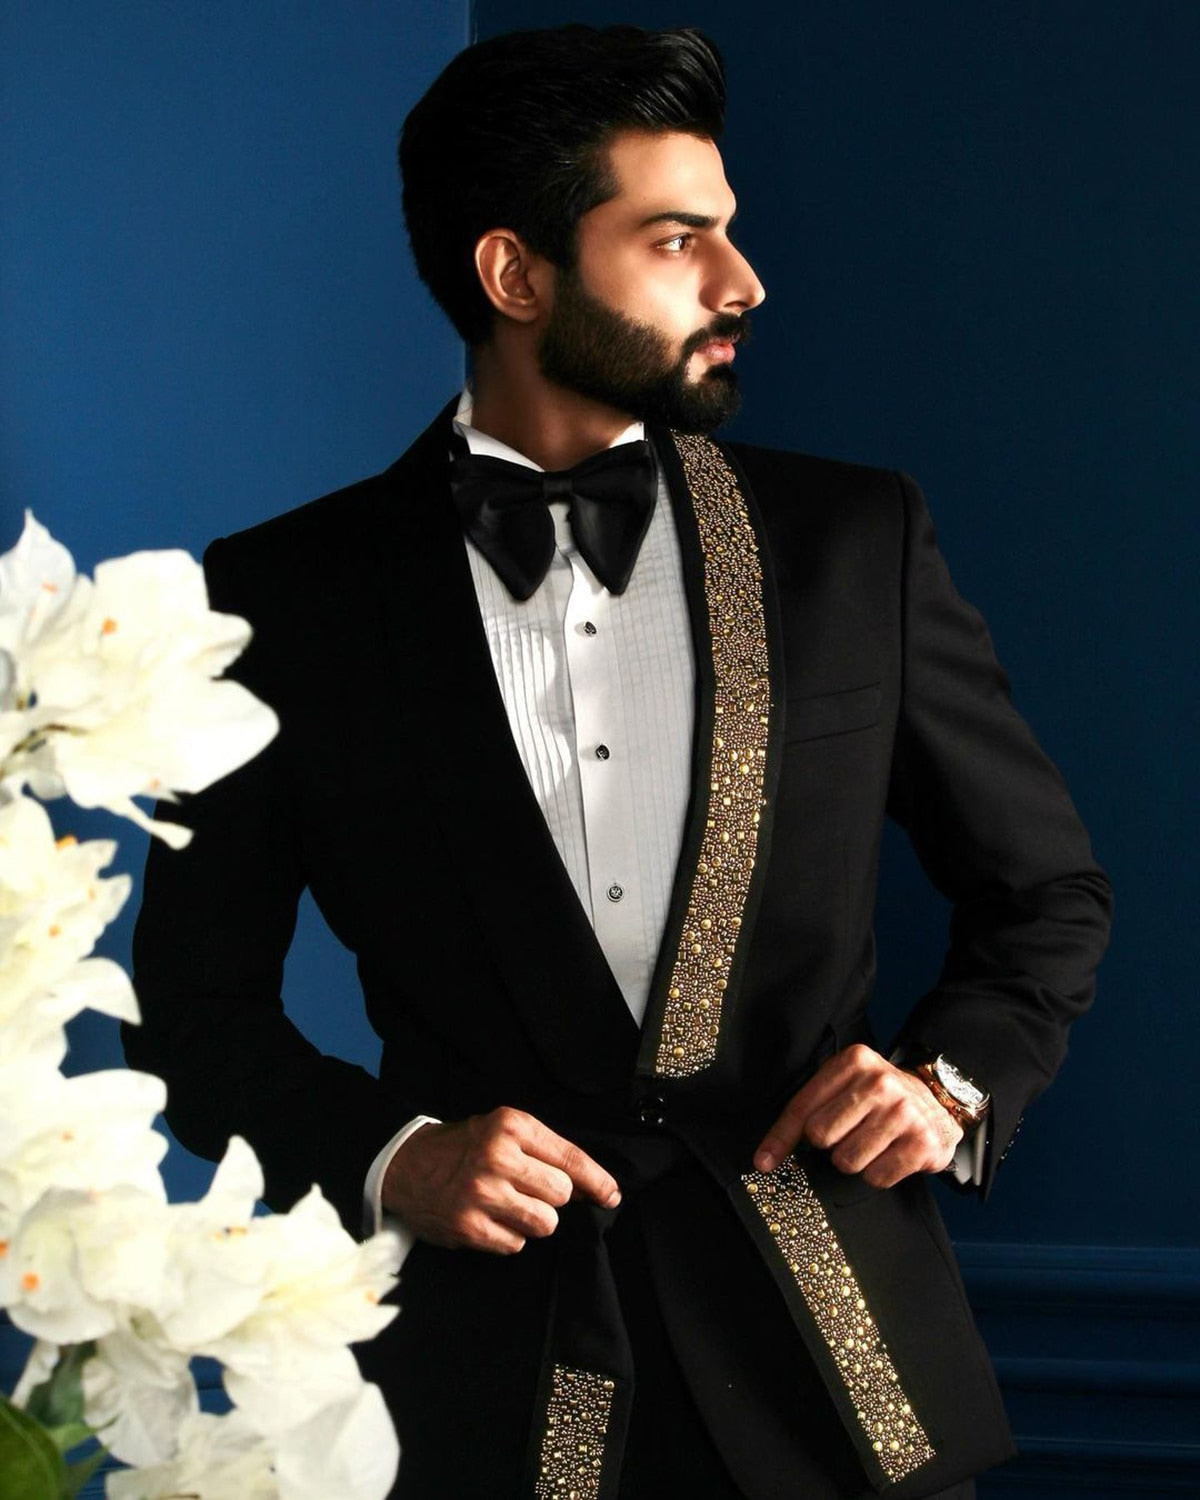 Black Sequin Party Men Suits One-piece Fashion Wedding Suit Jacket Belt Suit for Men Formal Occasion-Top Super Deals-as the picture-S-China-Free Item Online